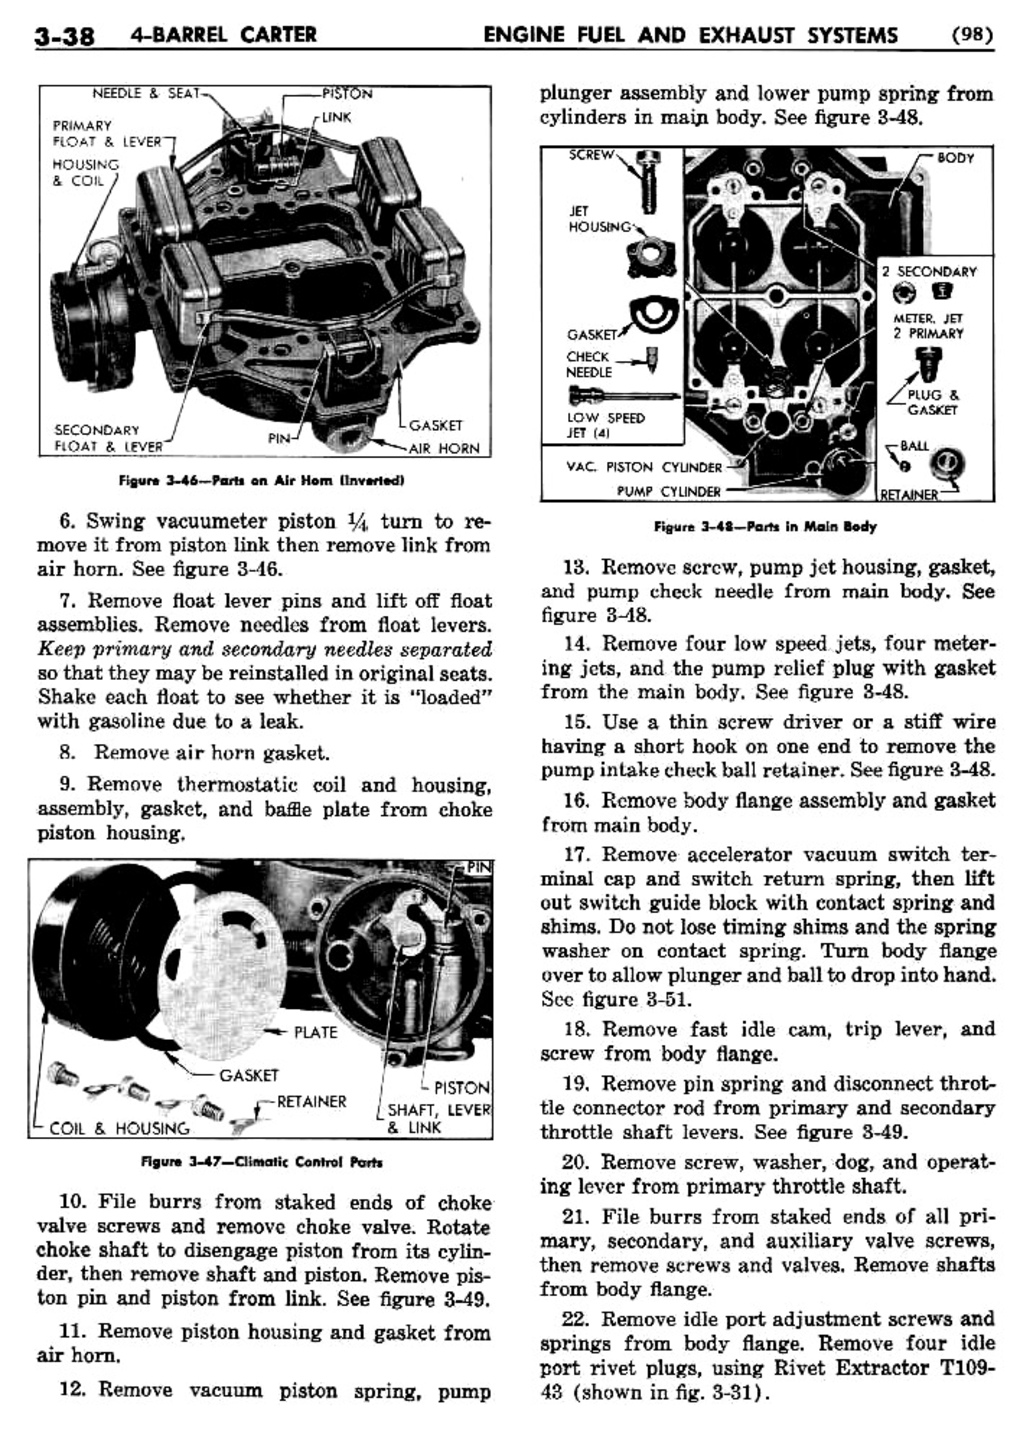 n_04 1955 Buick Shop Manual - Engine Fuel & Exhaust-038-038.jpg